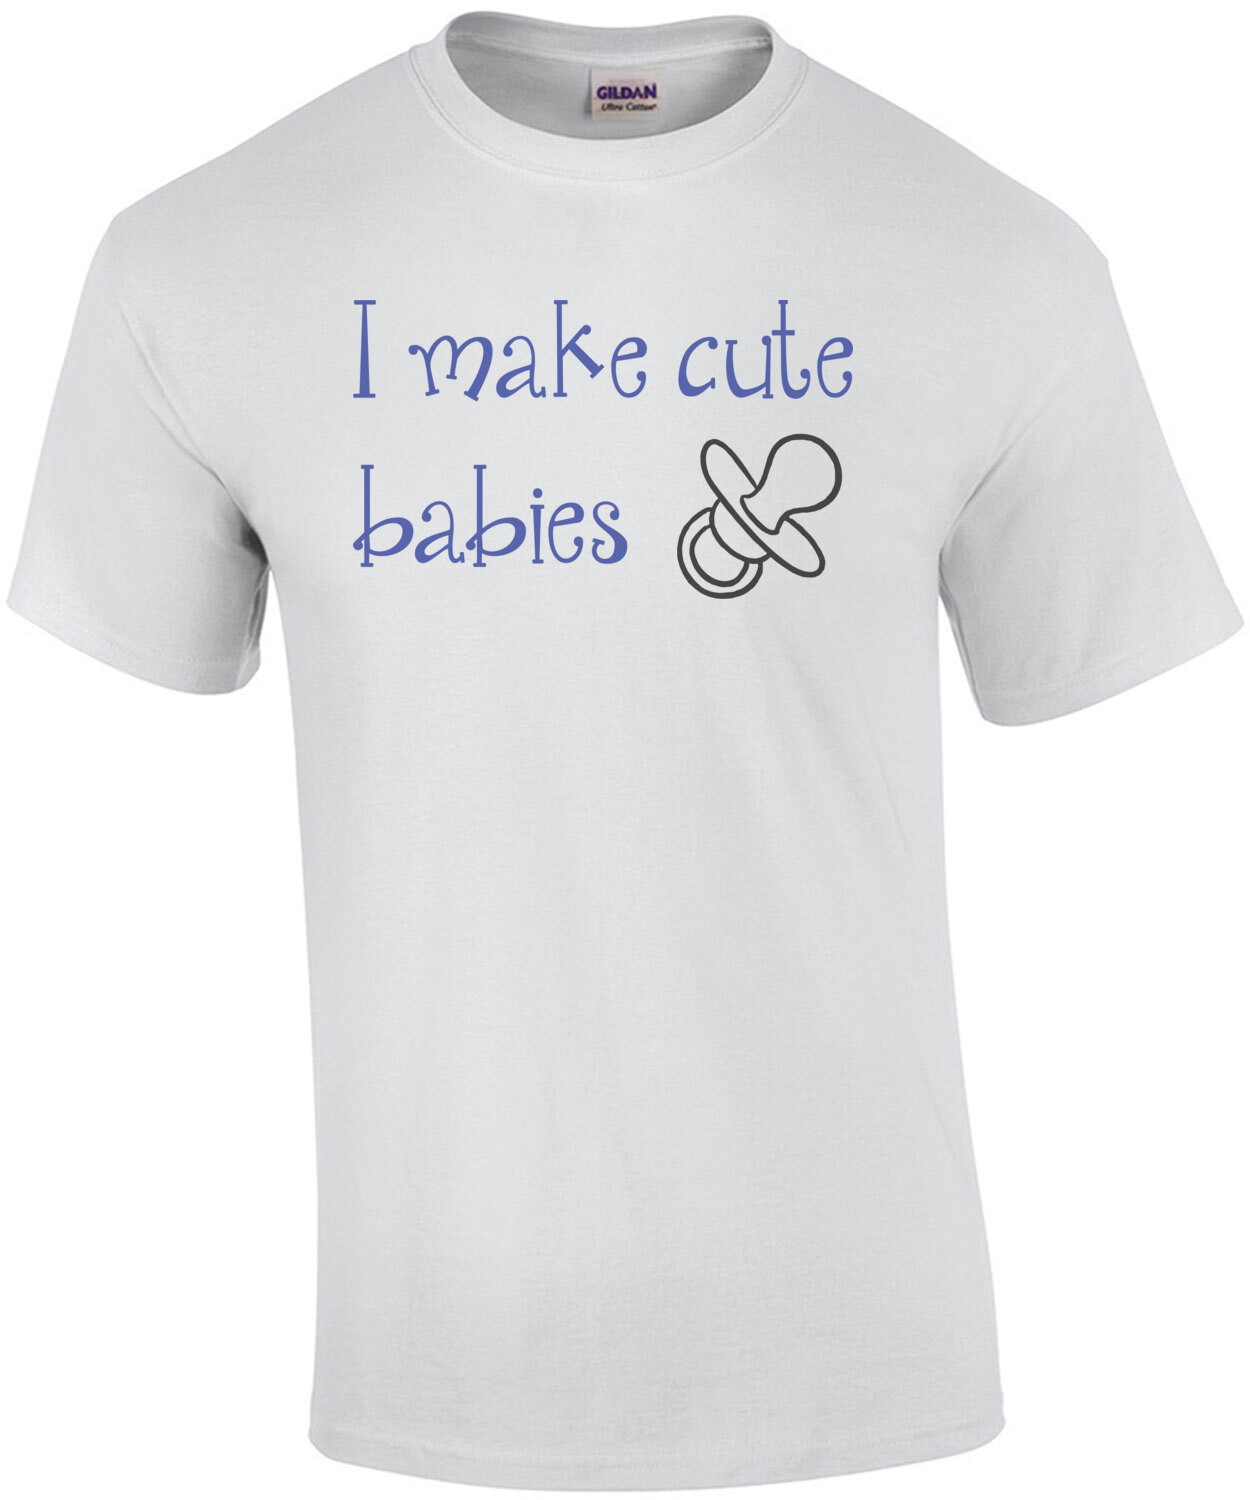 I Make Cute Babies. Shirt